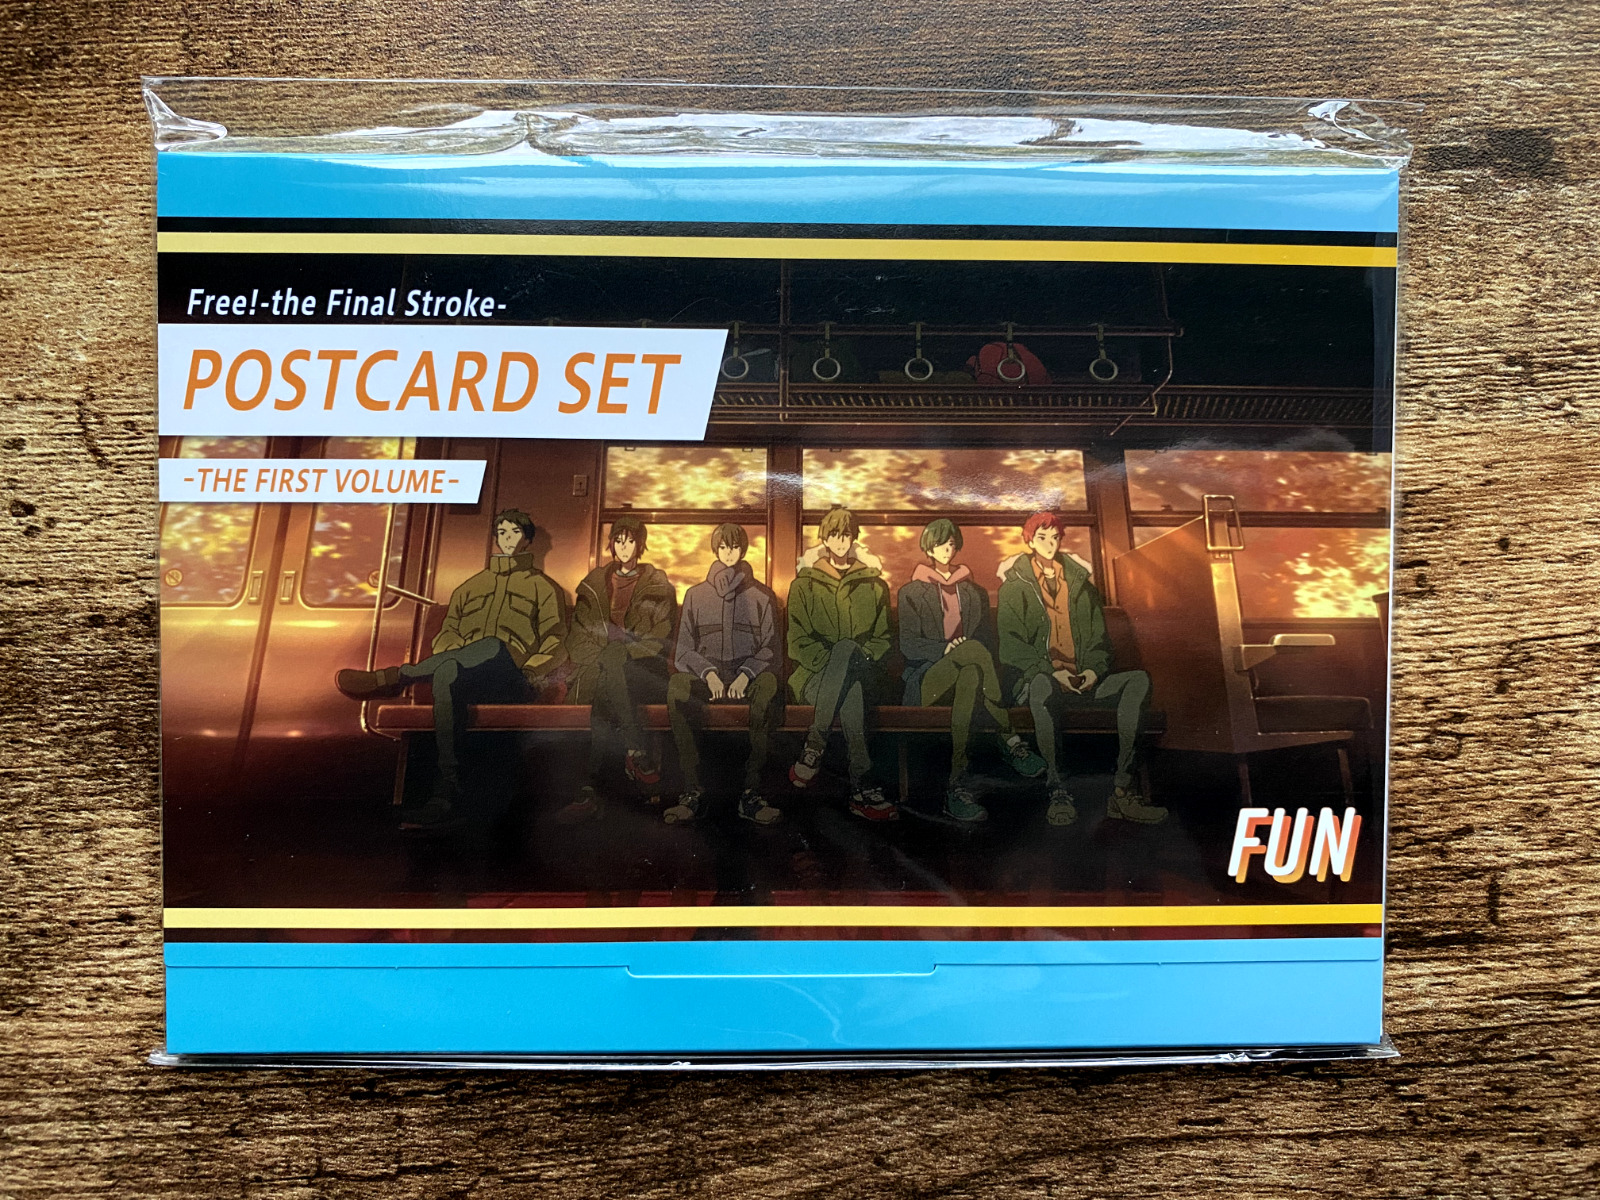 Free - the Final Stroke - 12 Postcard Set 【THE FIRST VOLUME】-FUN-